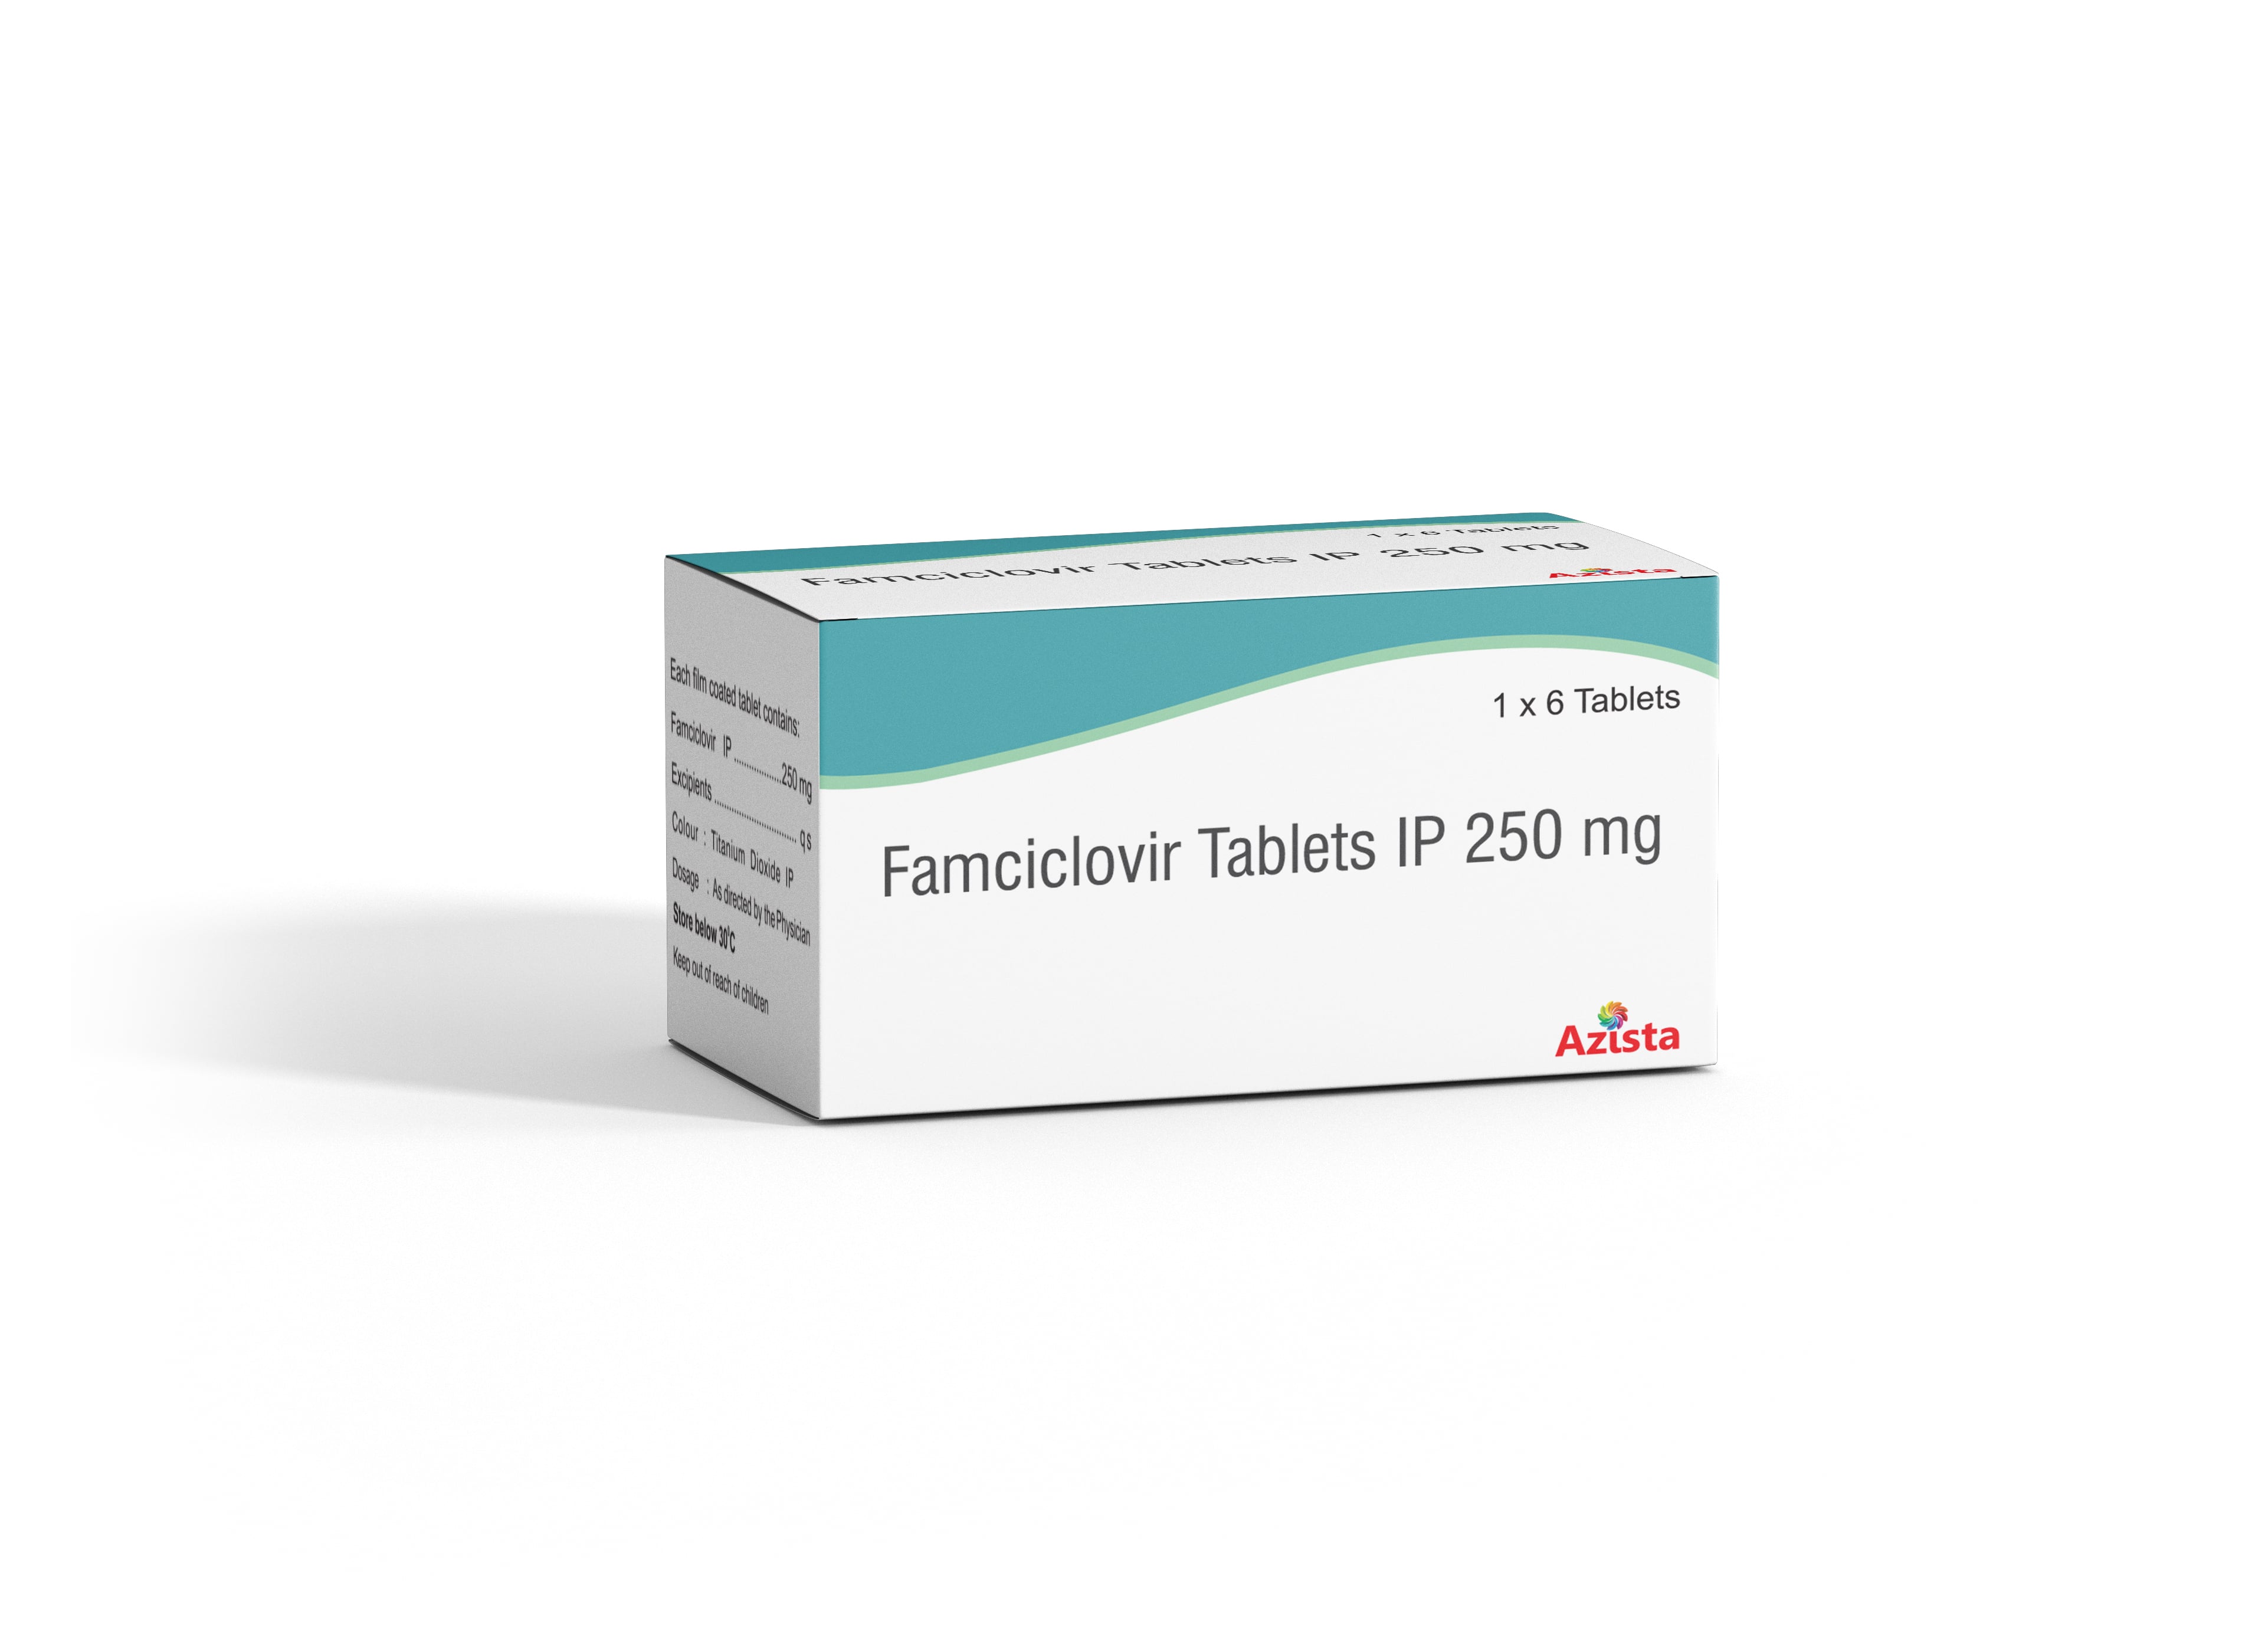 Famciclovir Tablet IP 250 mg